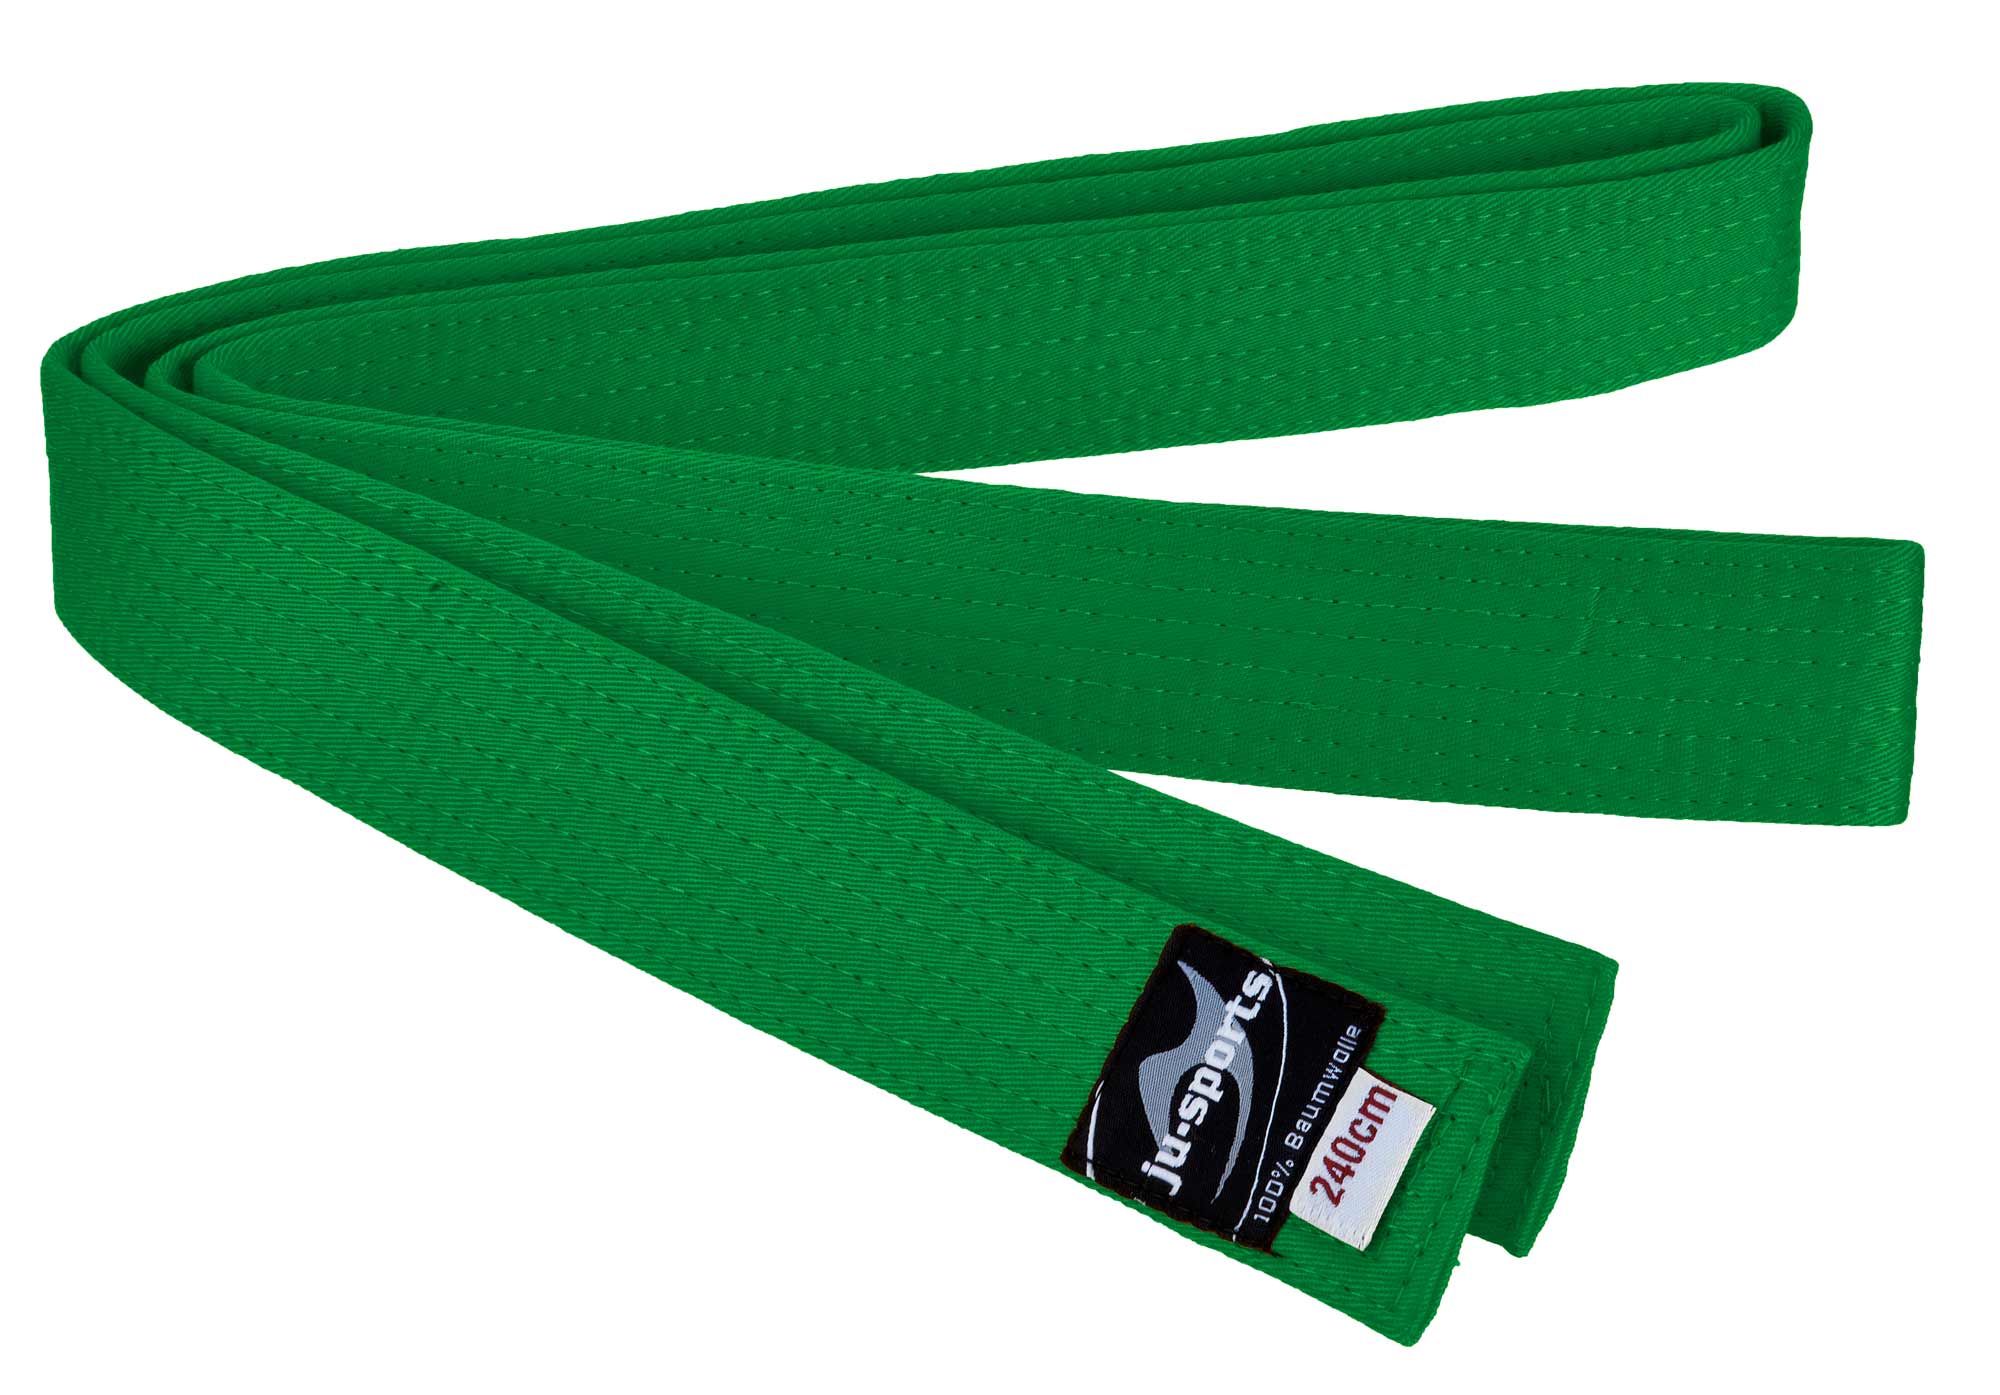 Ju-Sports budo belt green